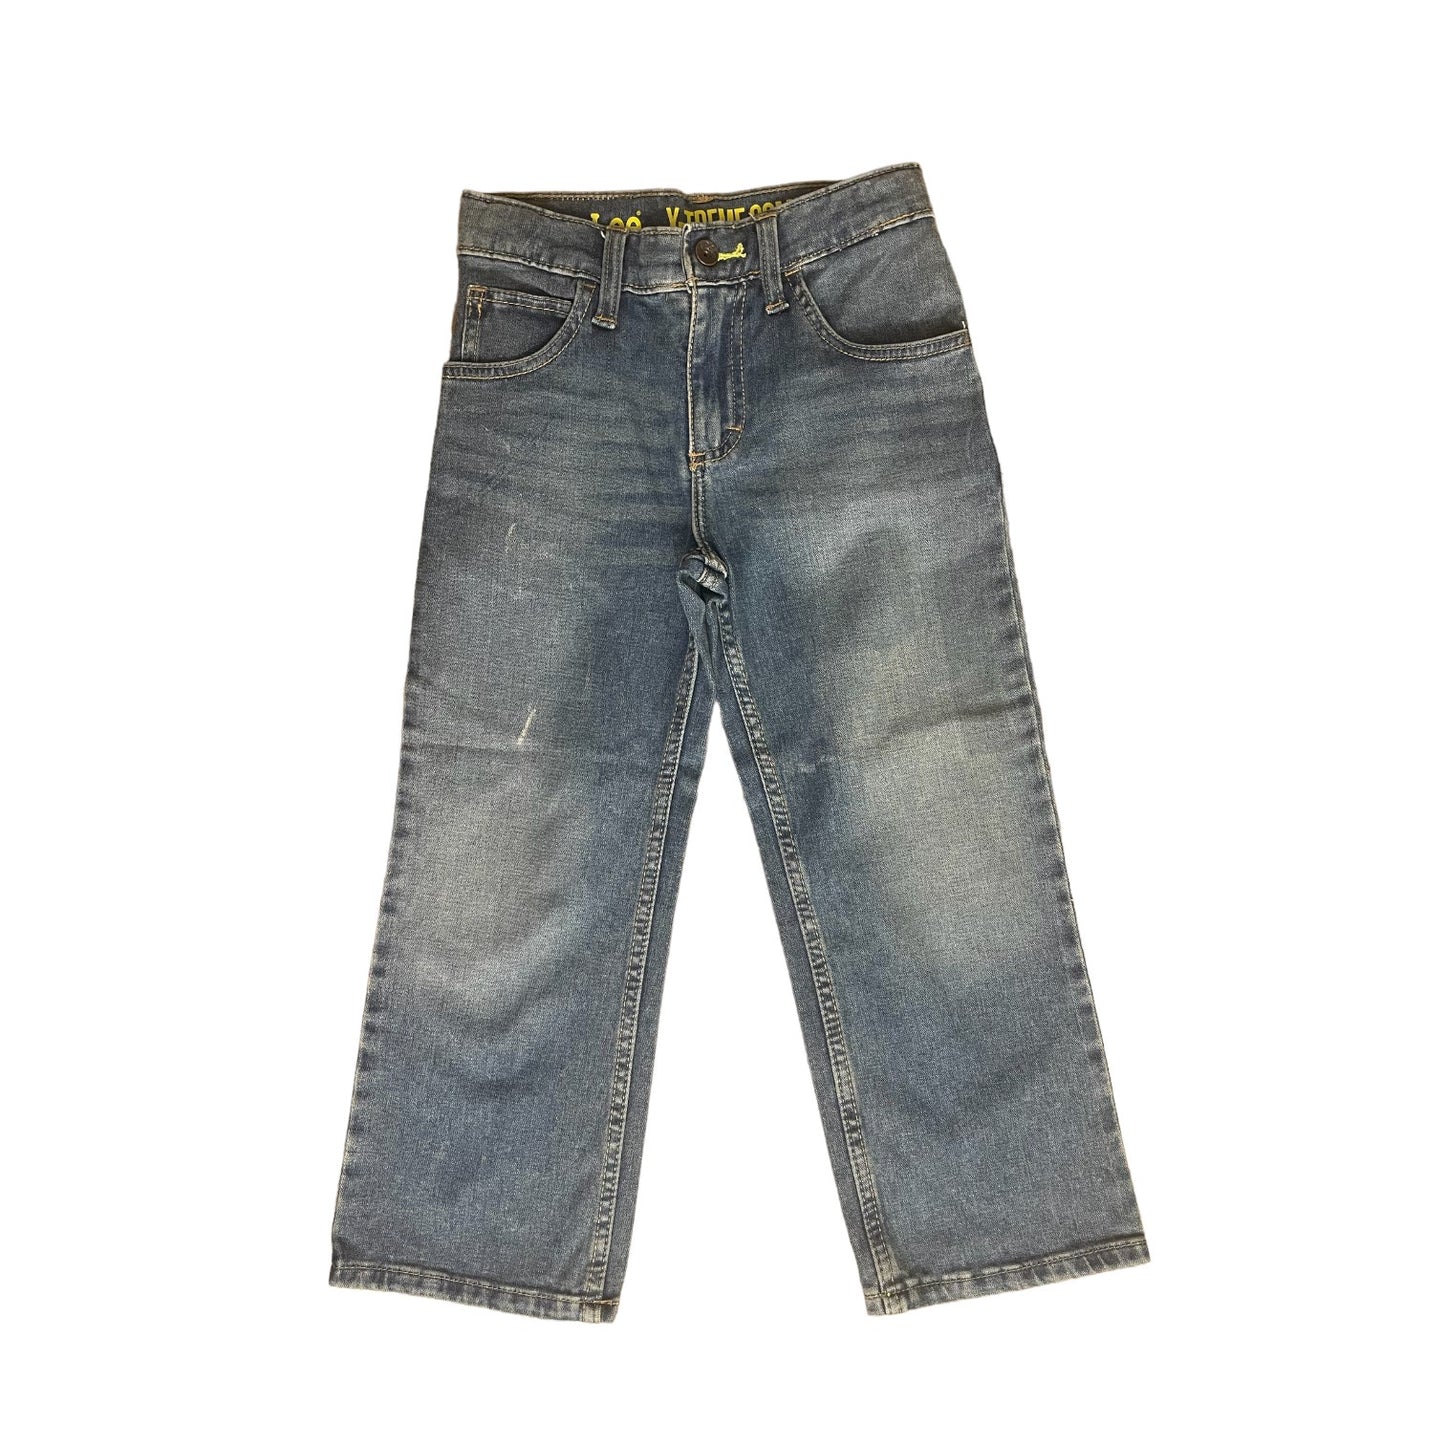 Lee Sport Boys Jeans X-Treme Comfort Size 5